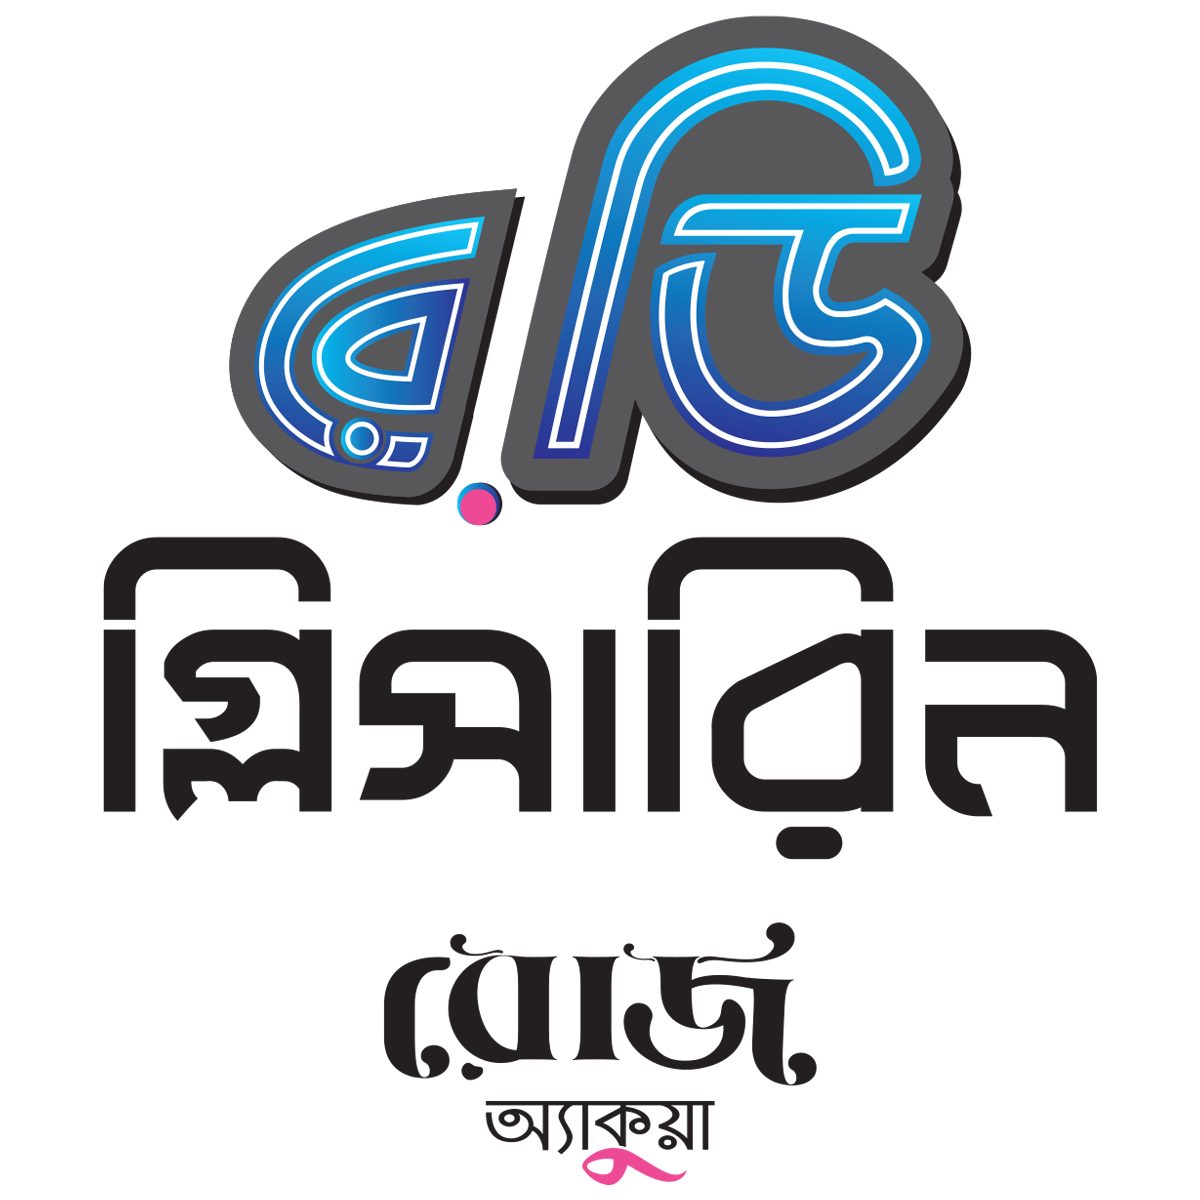 RAY-D.-Glycerine-Bangla-logo